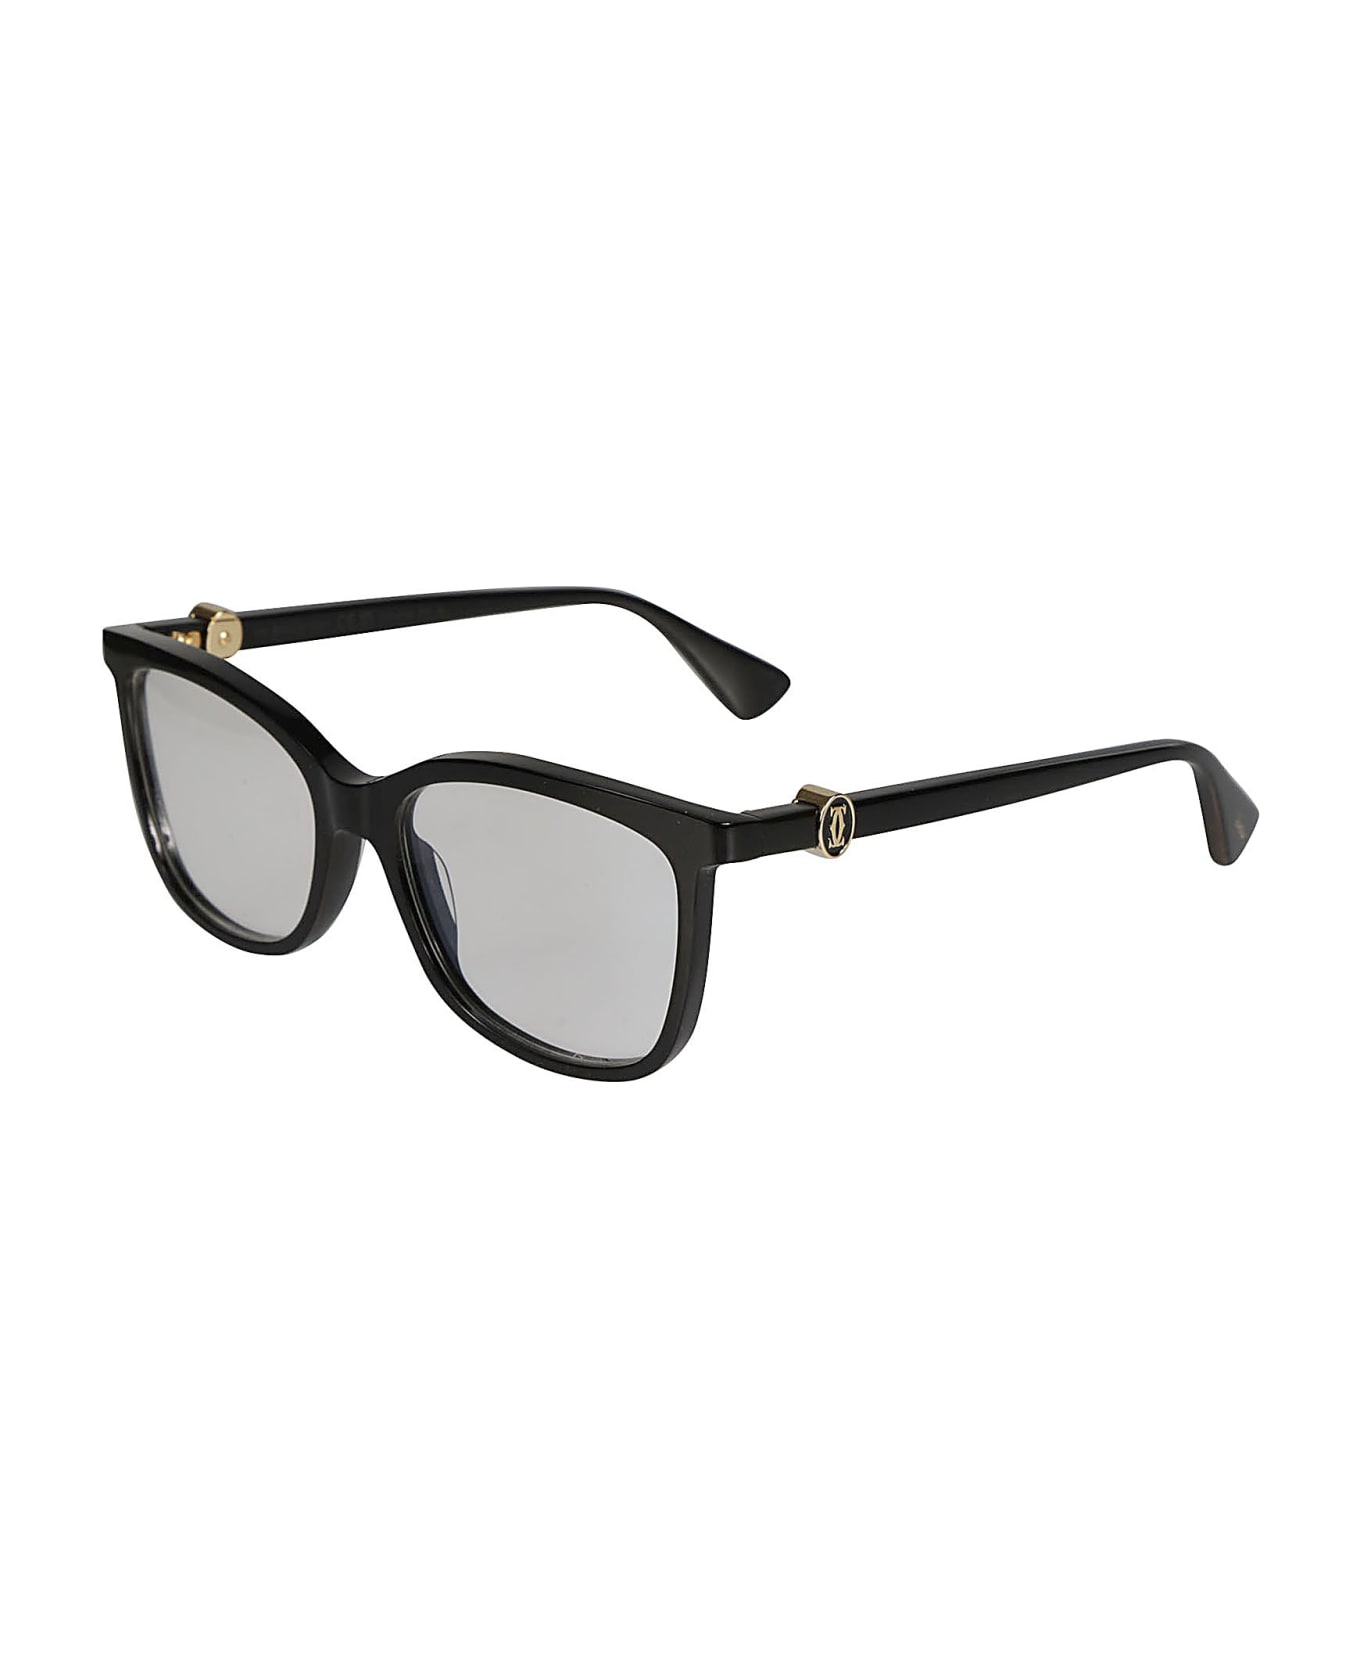 Cartier Eyewear Classic Logo Sided Glasses - Black/Transparent アイウェア